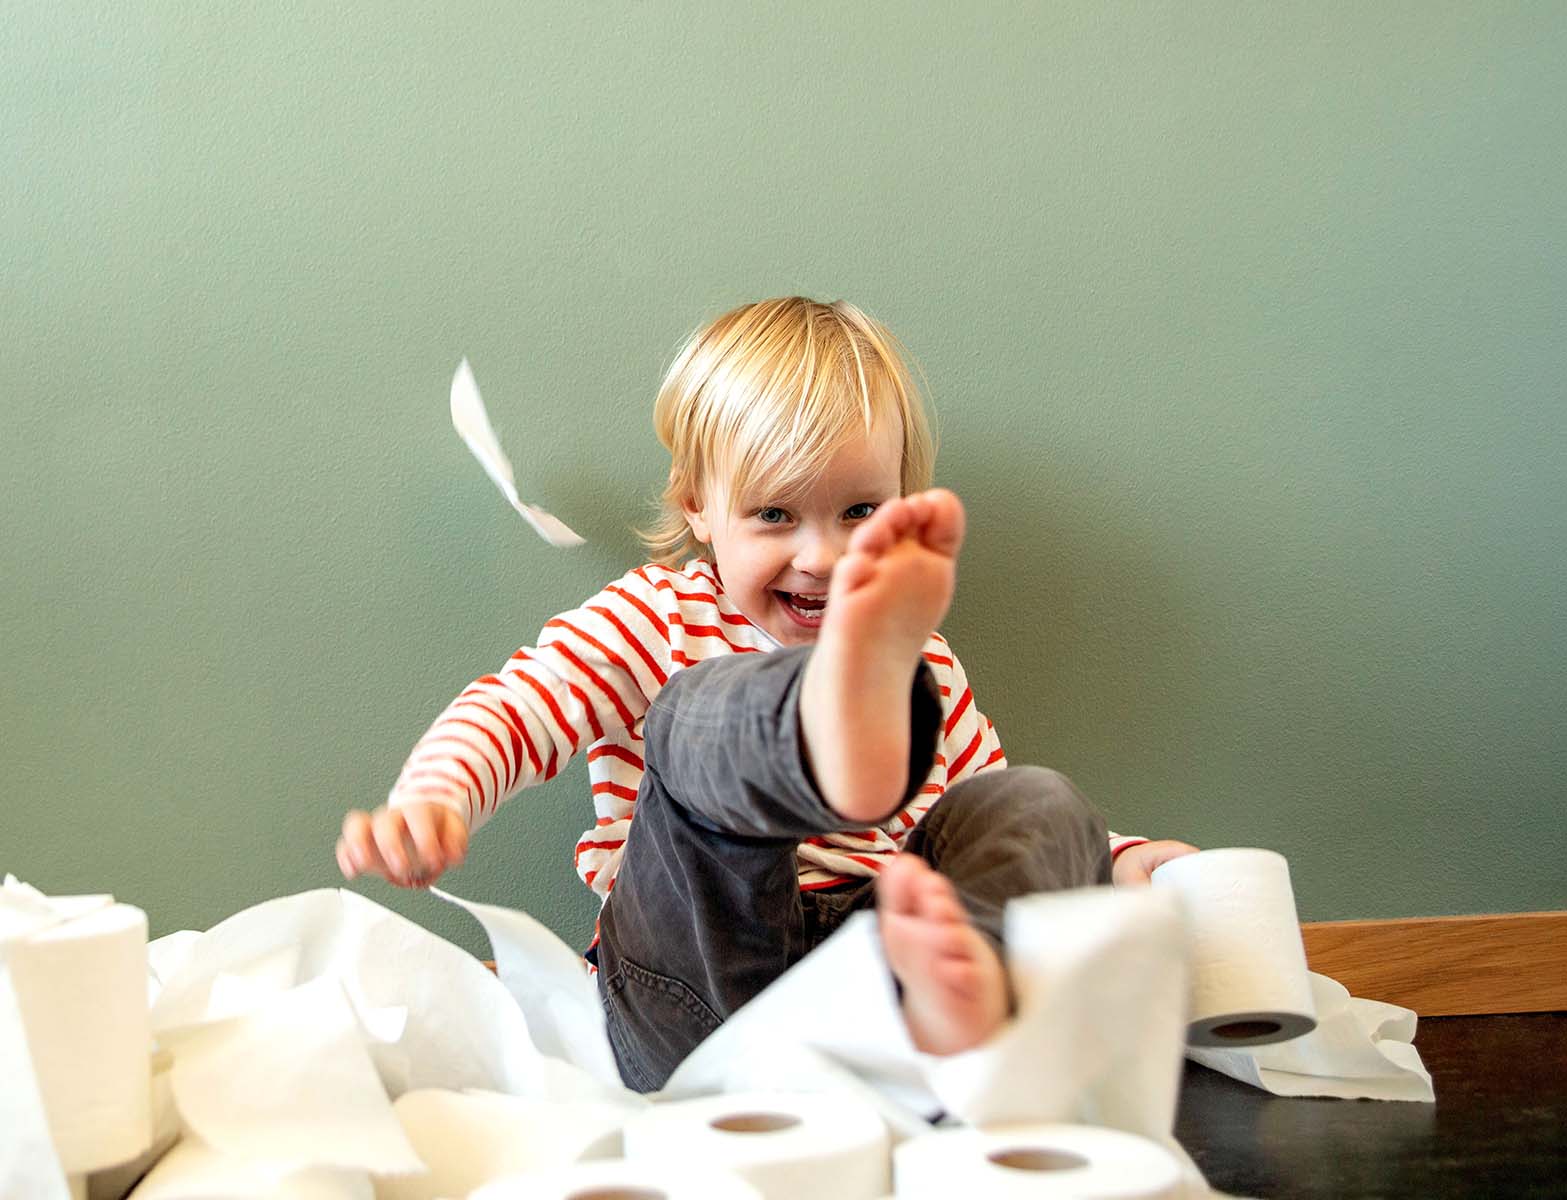 A toddler gleefully throwing toilet paper around.